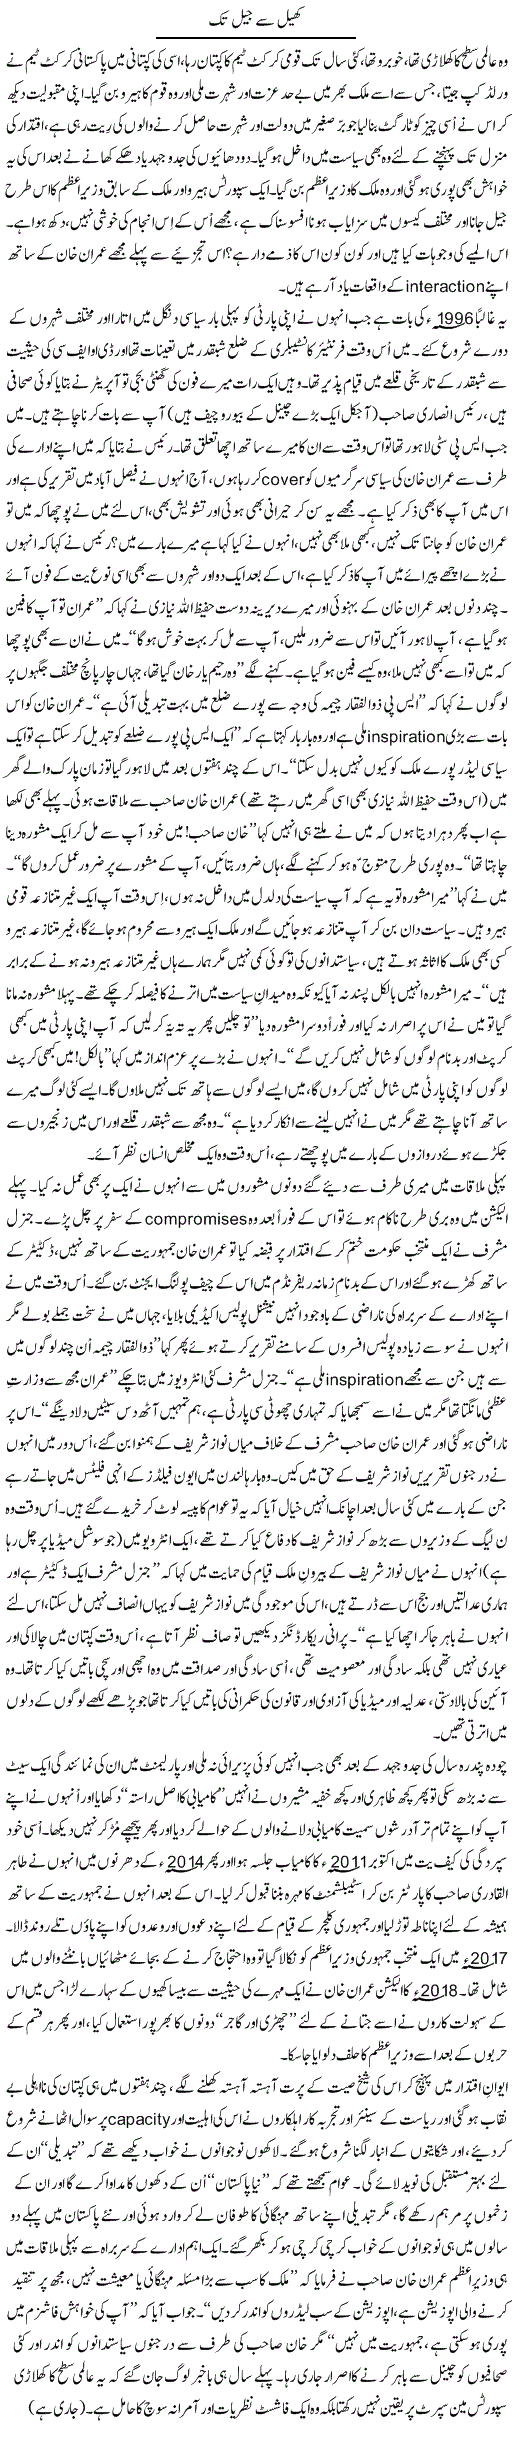 Zulfiqar Ahmad Cheema Column About Imran Khan Politics